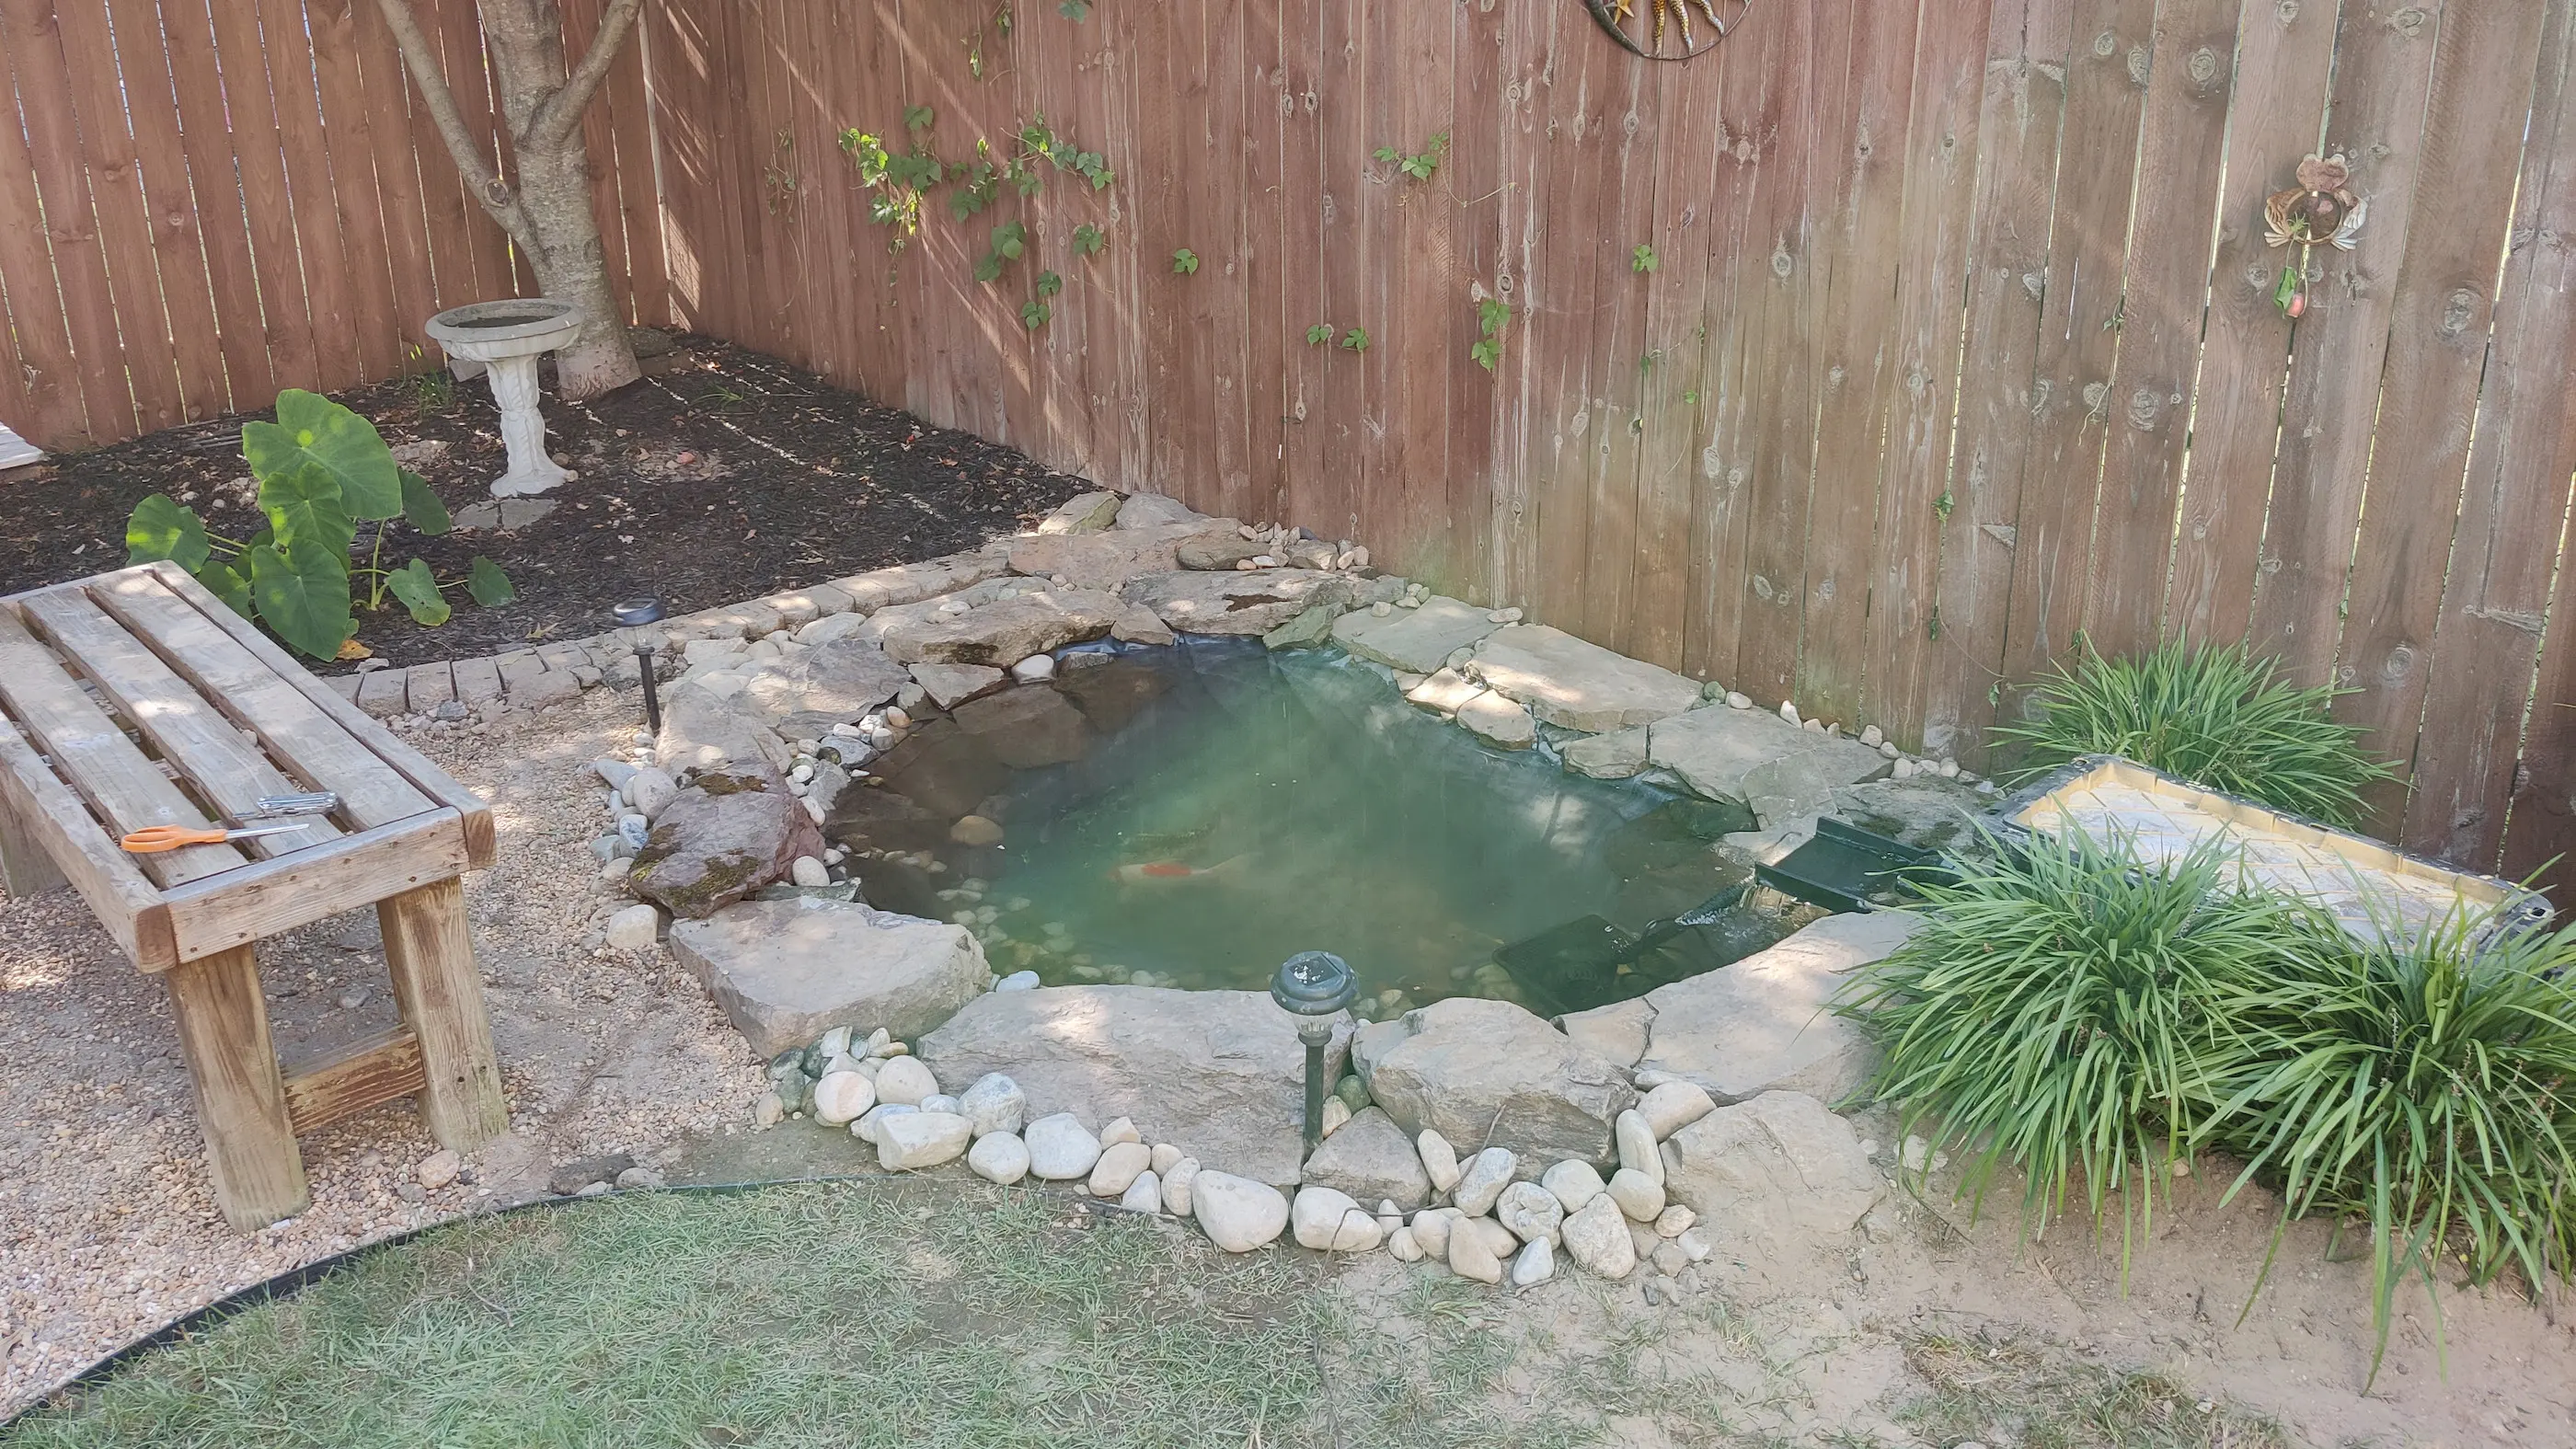 Small koi pond next to backyard fence.